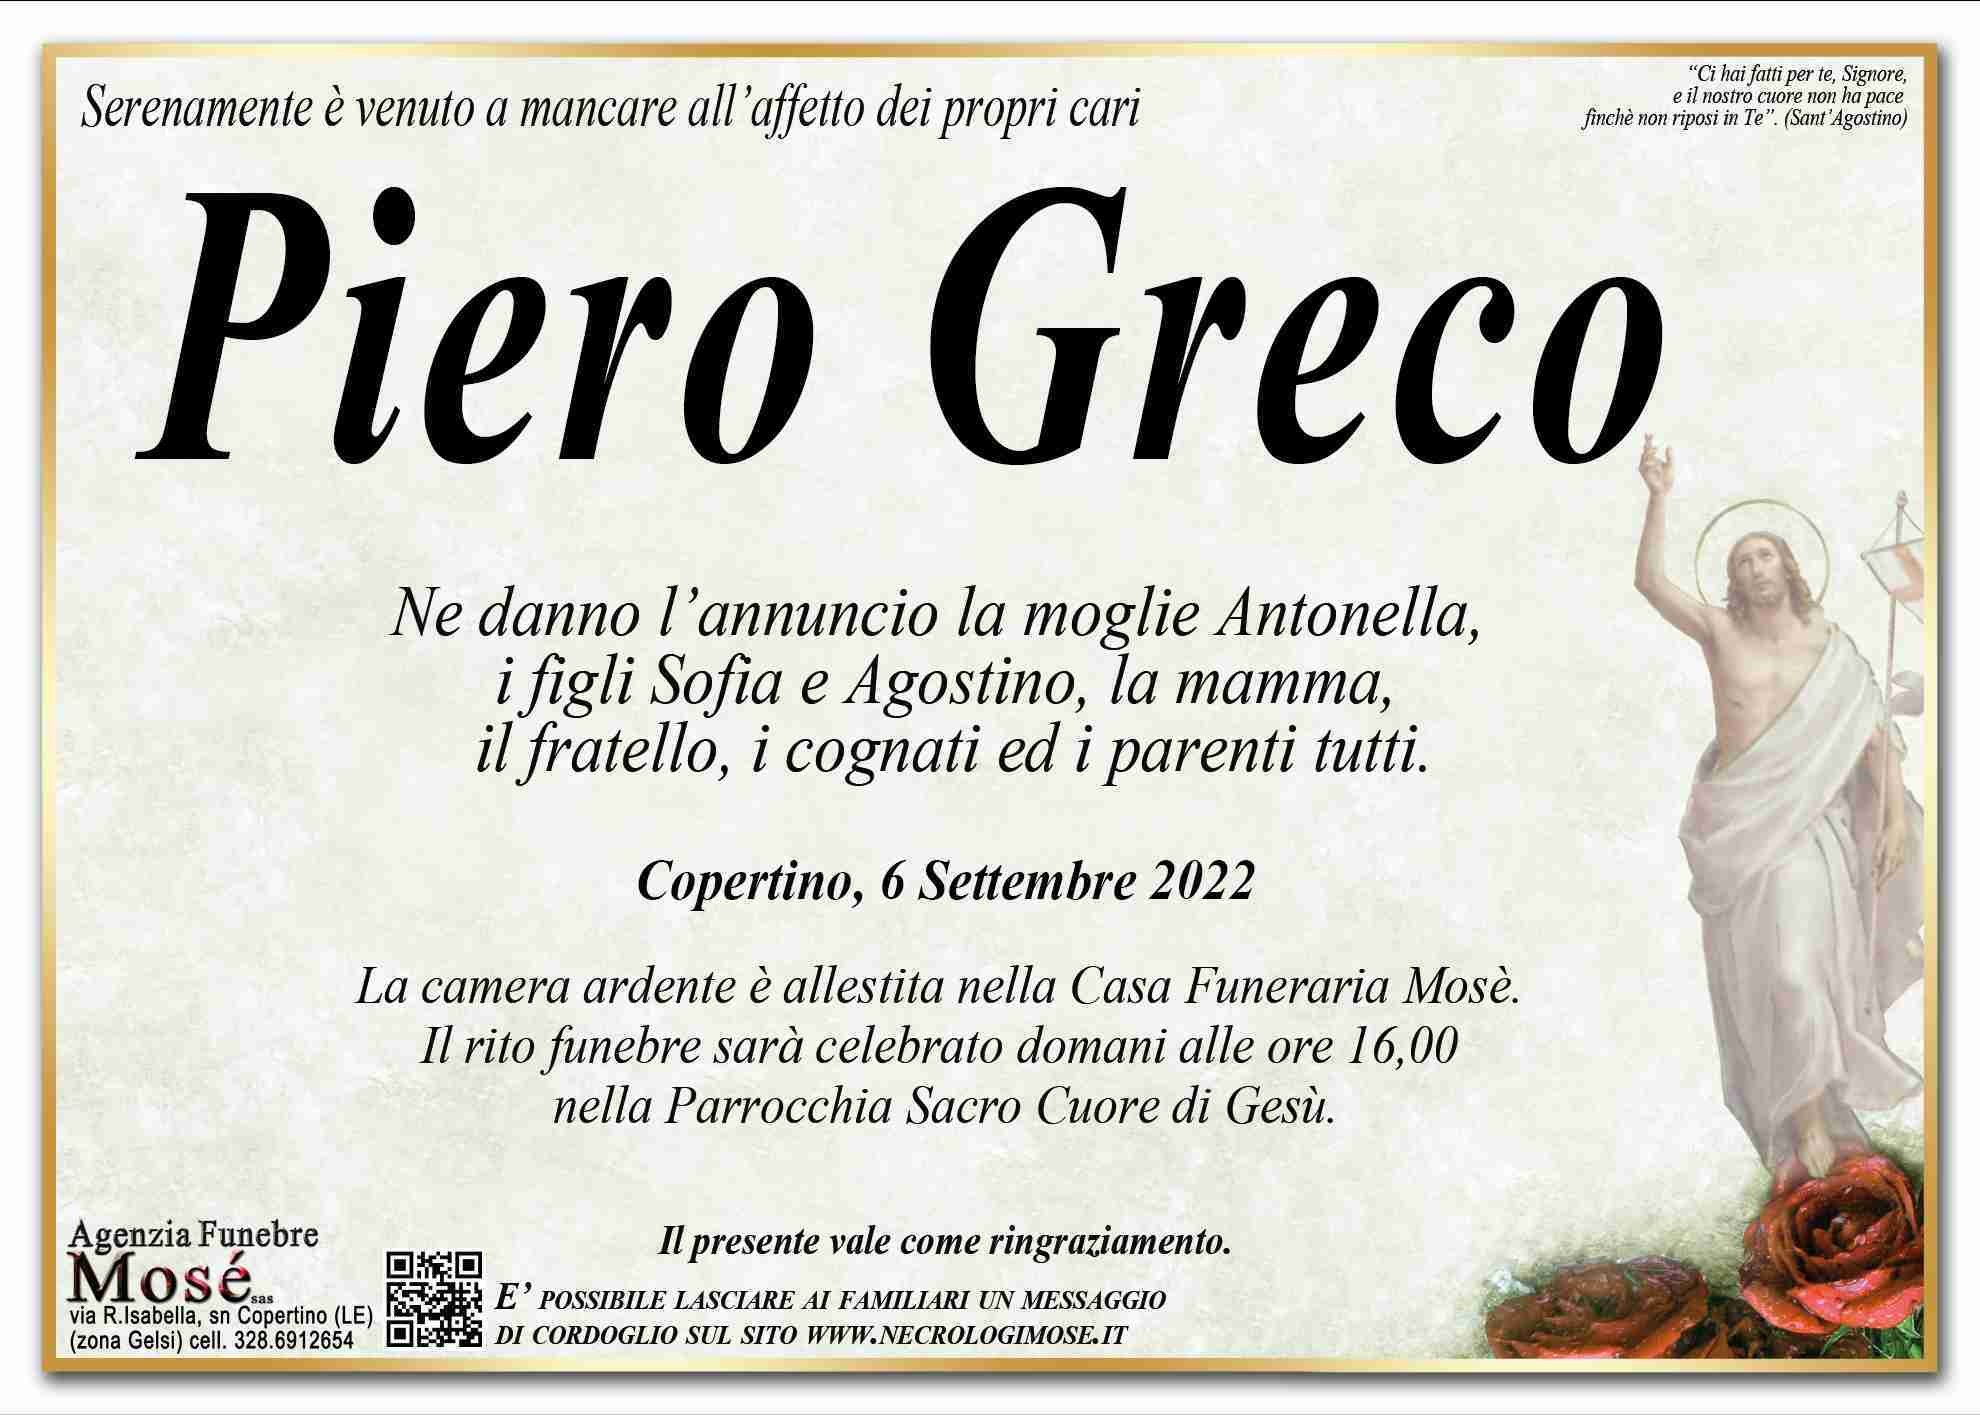 Piero Greco